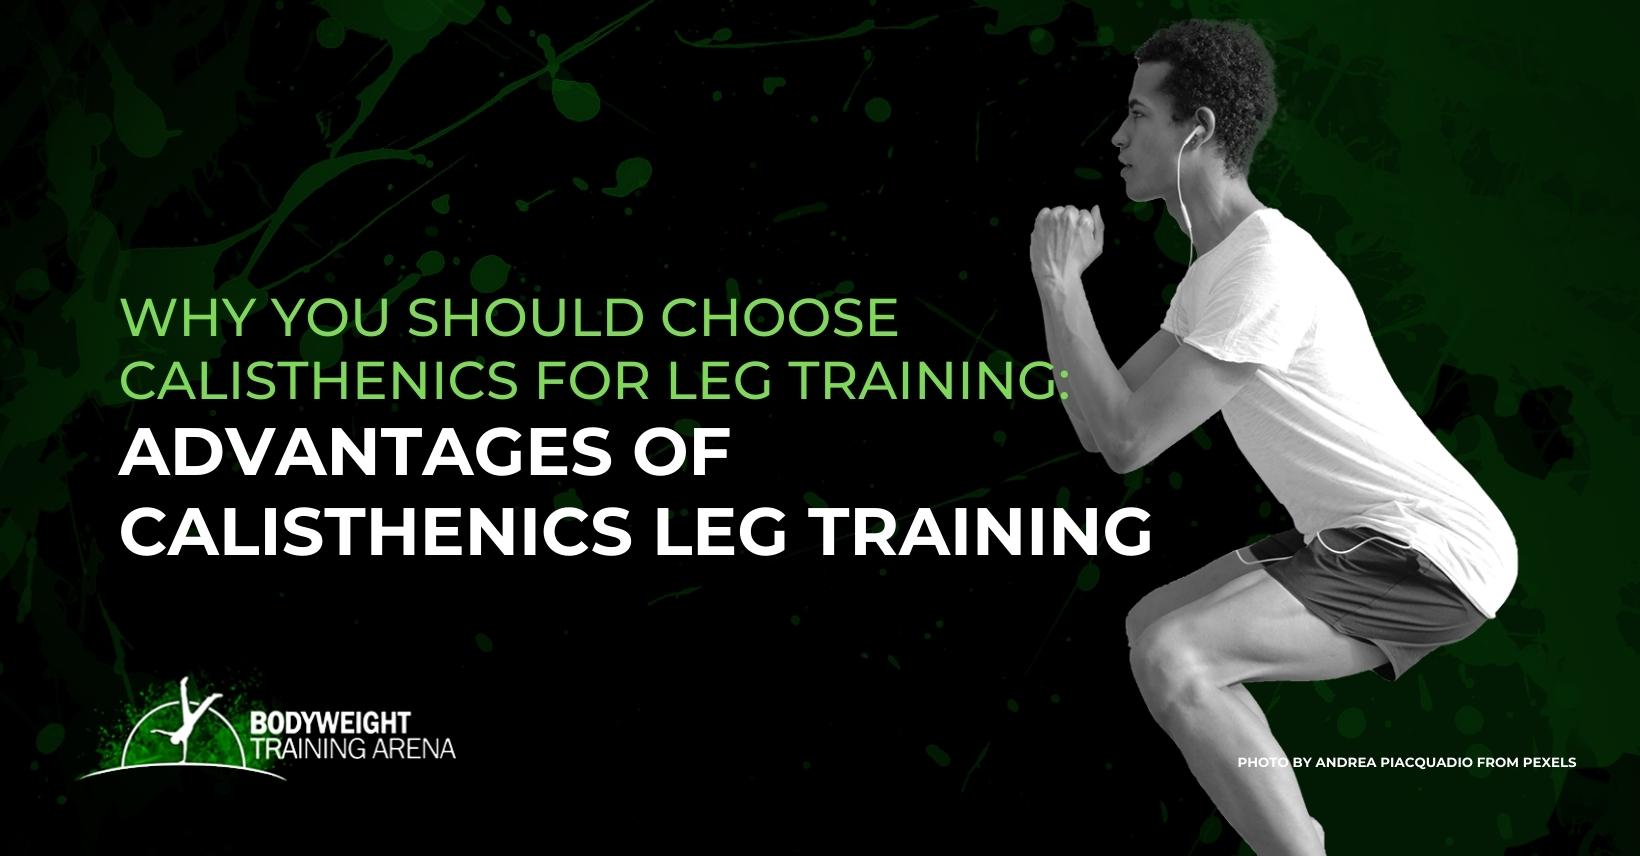 Why you should choose calisthenics for leg training: Advantages of calisthenics leg training